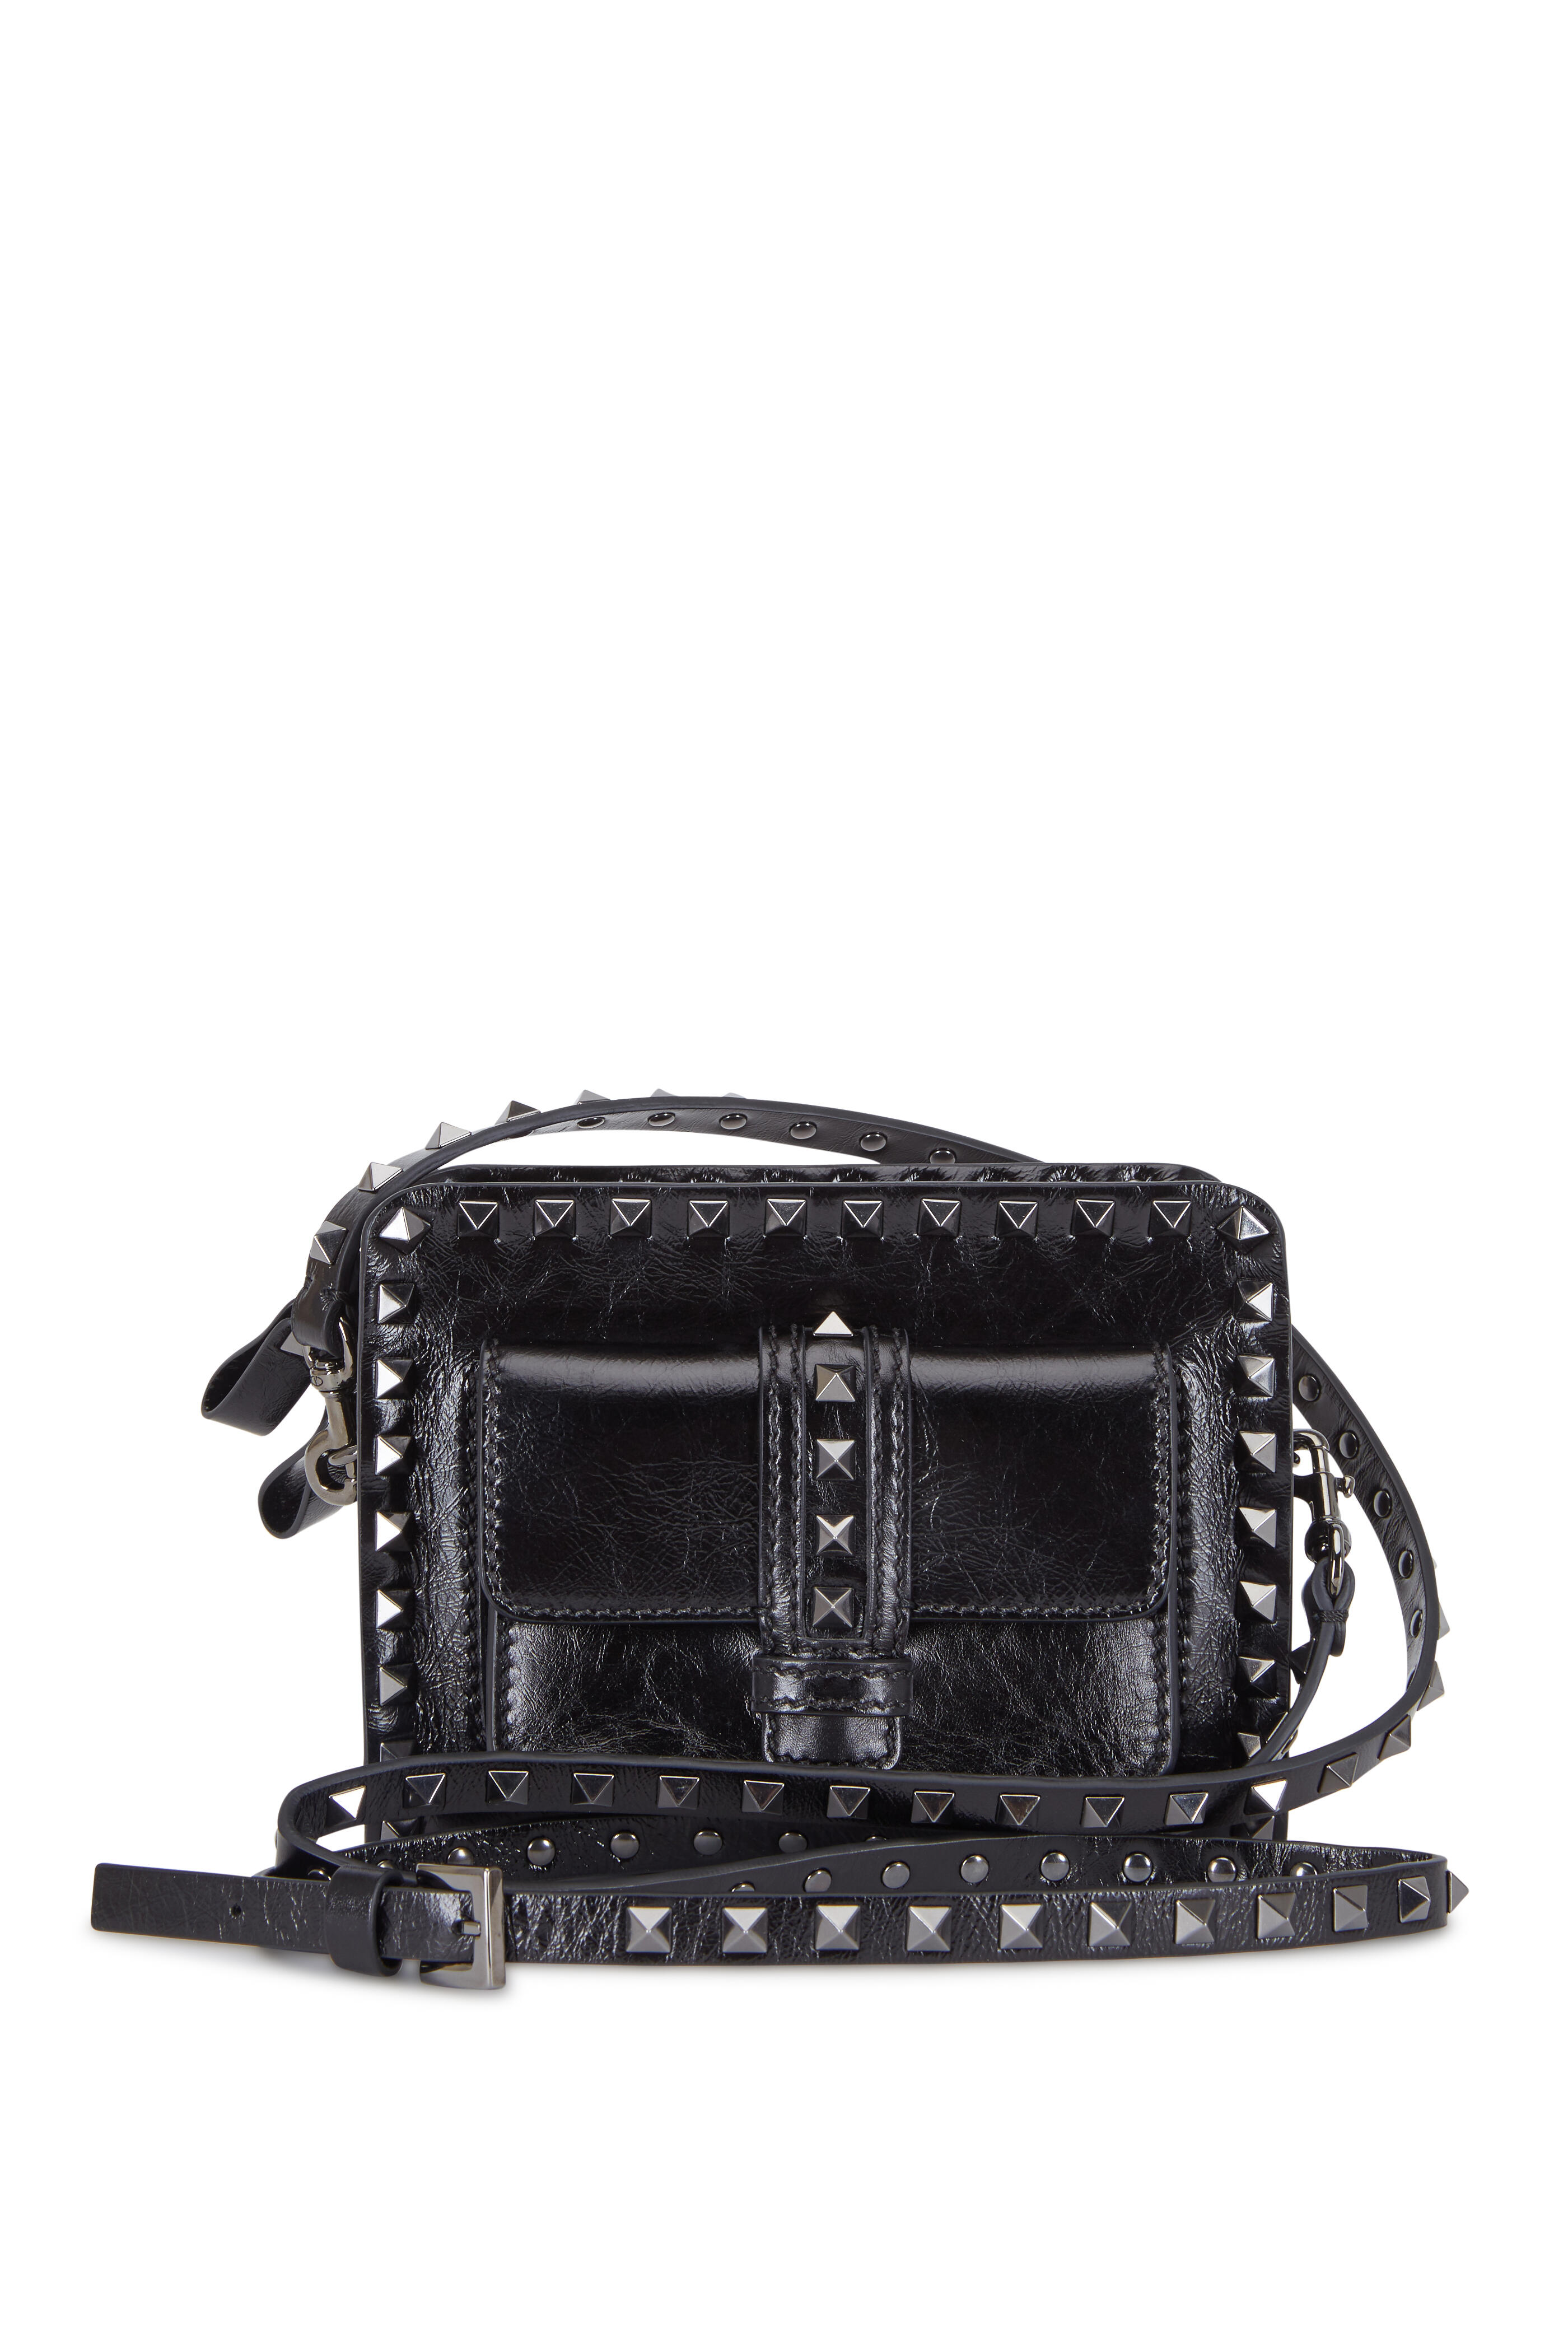 VALENTINO Garavani Rockstud Spike Chain Leather Crossbody Bag Black 